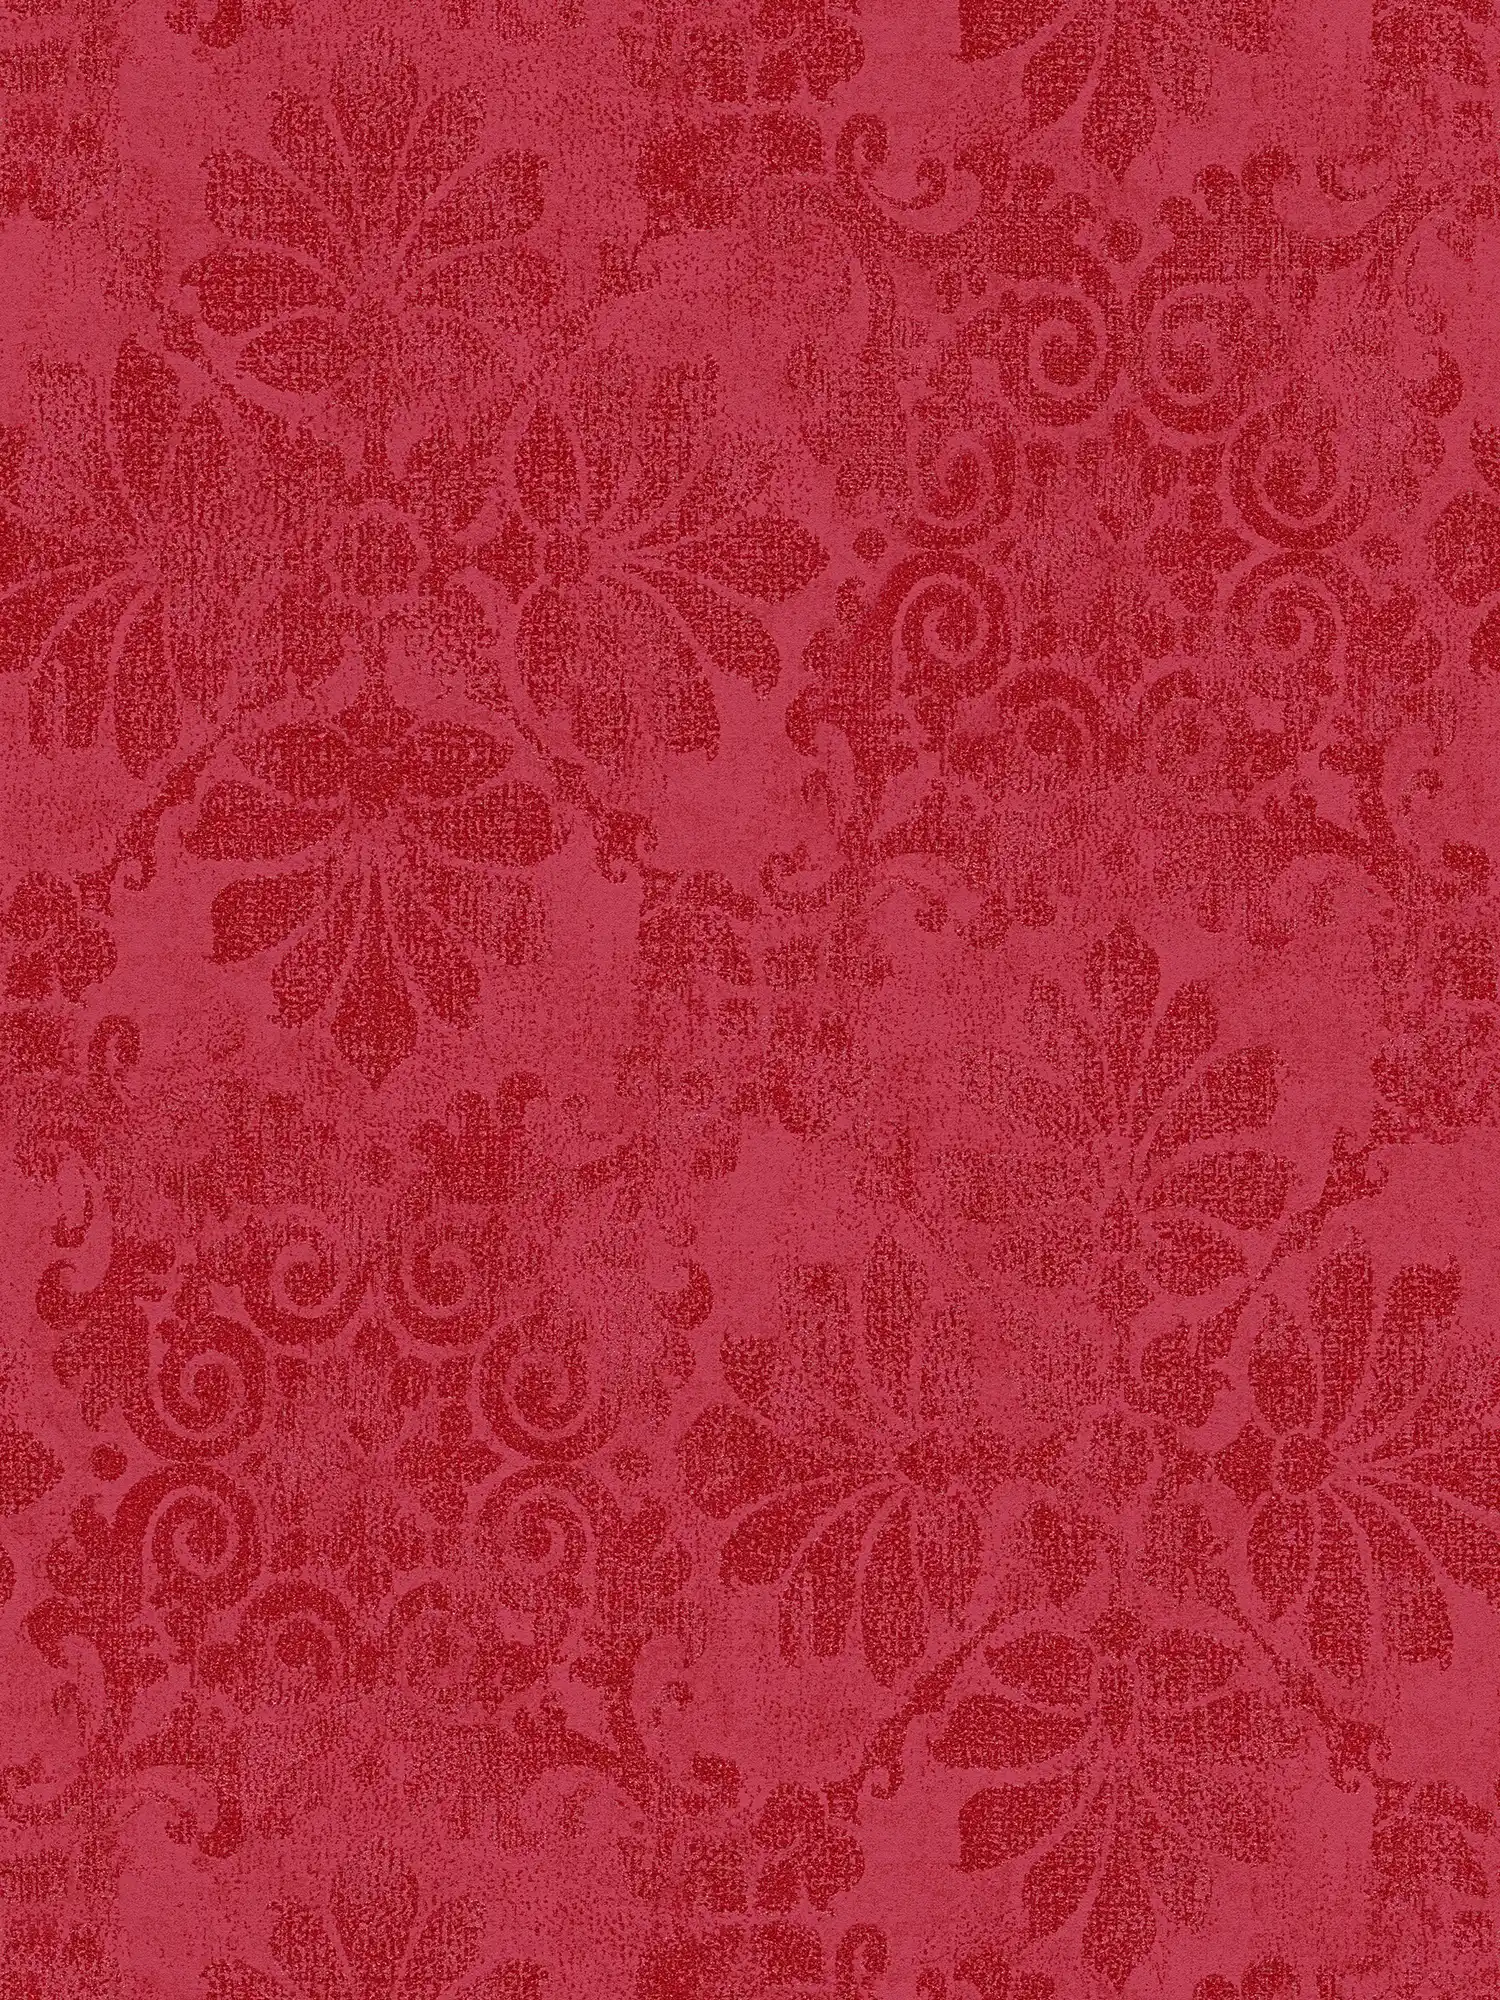 Patroonbehang met bloemenornamenten in vintage look - rood, metallic
